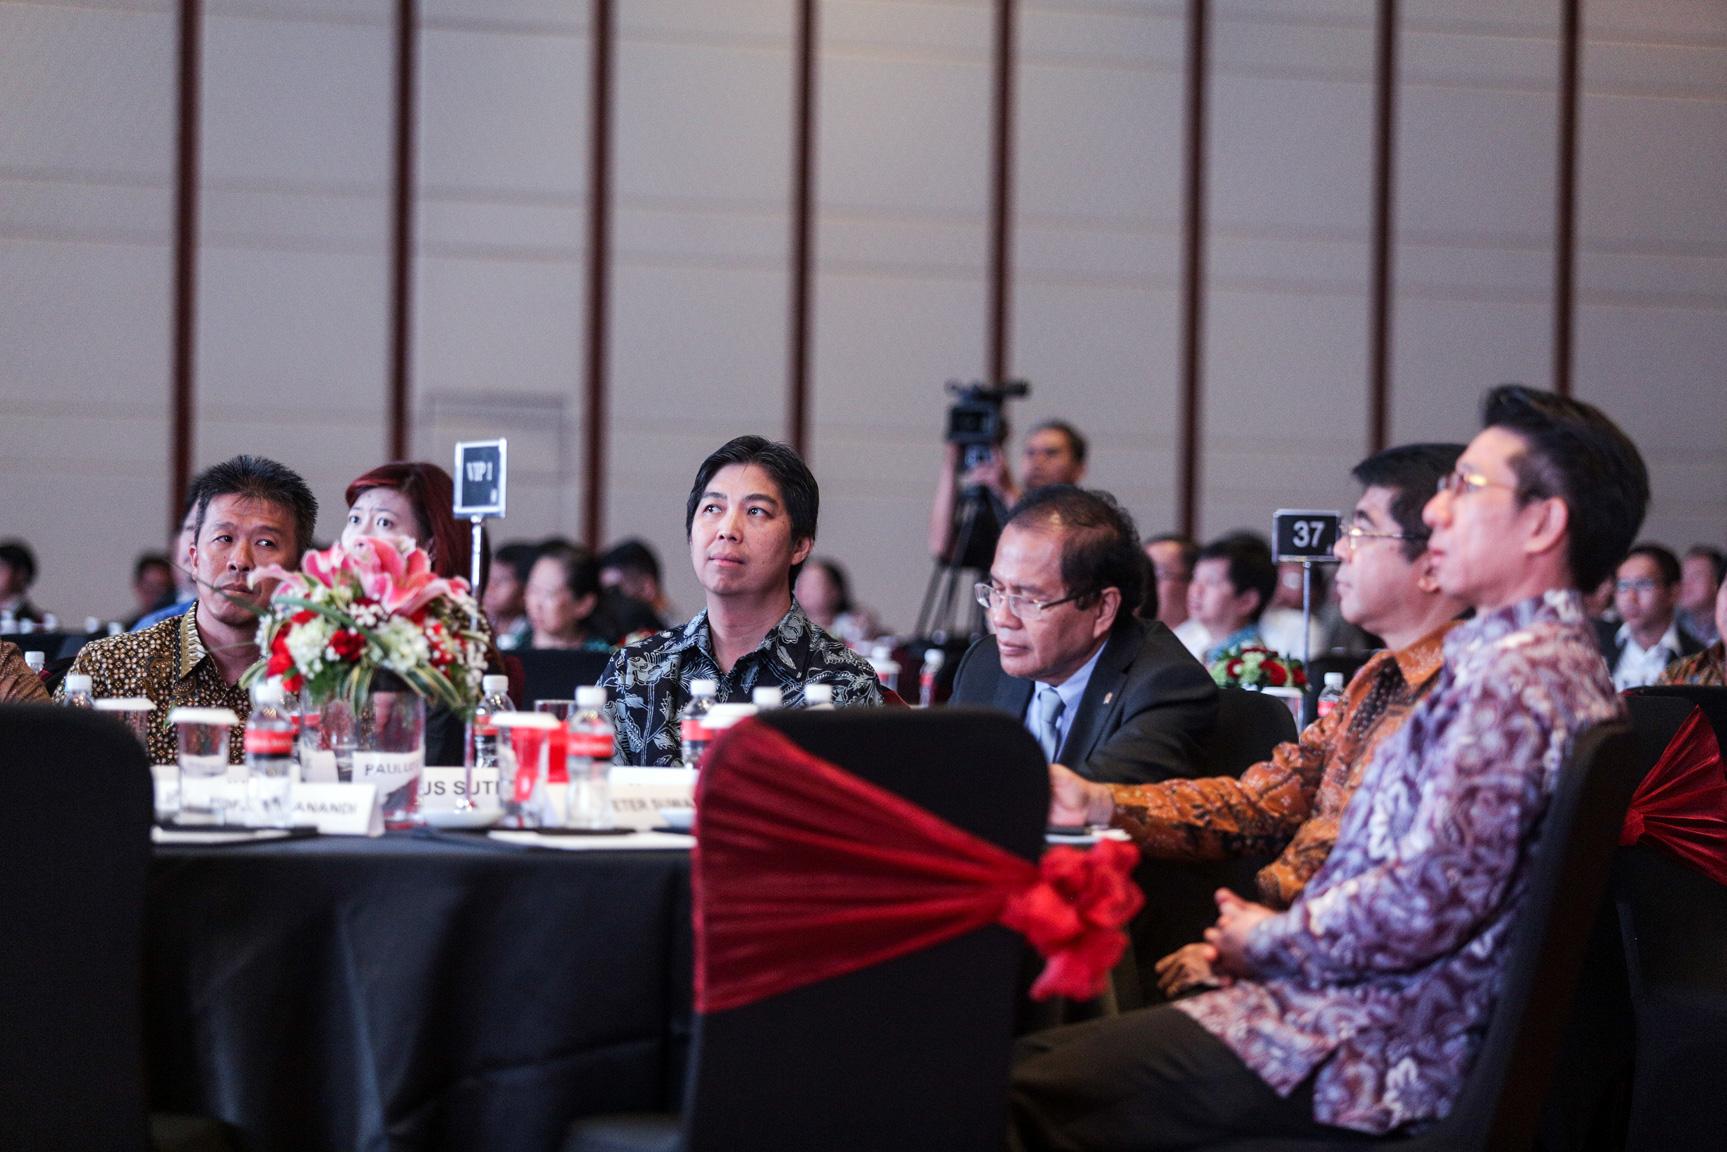 Ketua BKPM Franky Sibarani, Menteri Koordinator Bidang Kemaritiman dan Sumber Daya, Rizal Ramli serta Presiden Direktur DBS Indonesia Paulus Sutisna dalam acara DBS Asian Insight Conference 2015 di Jakarta.